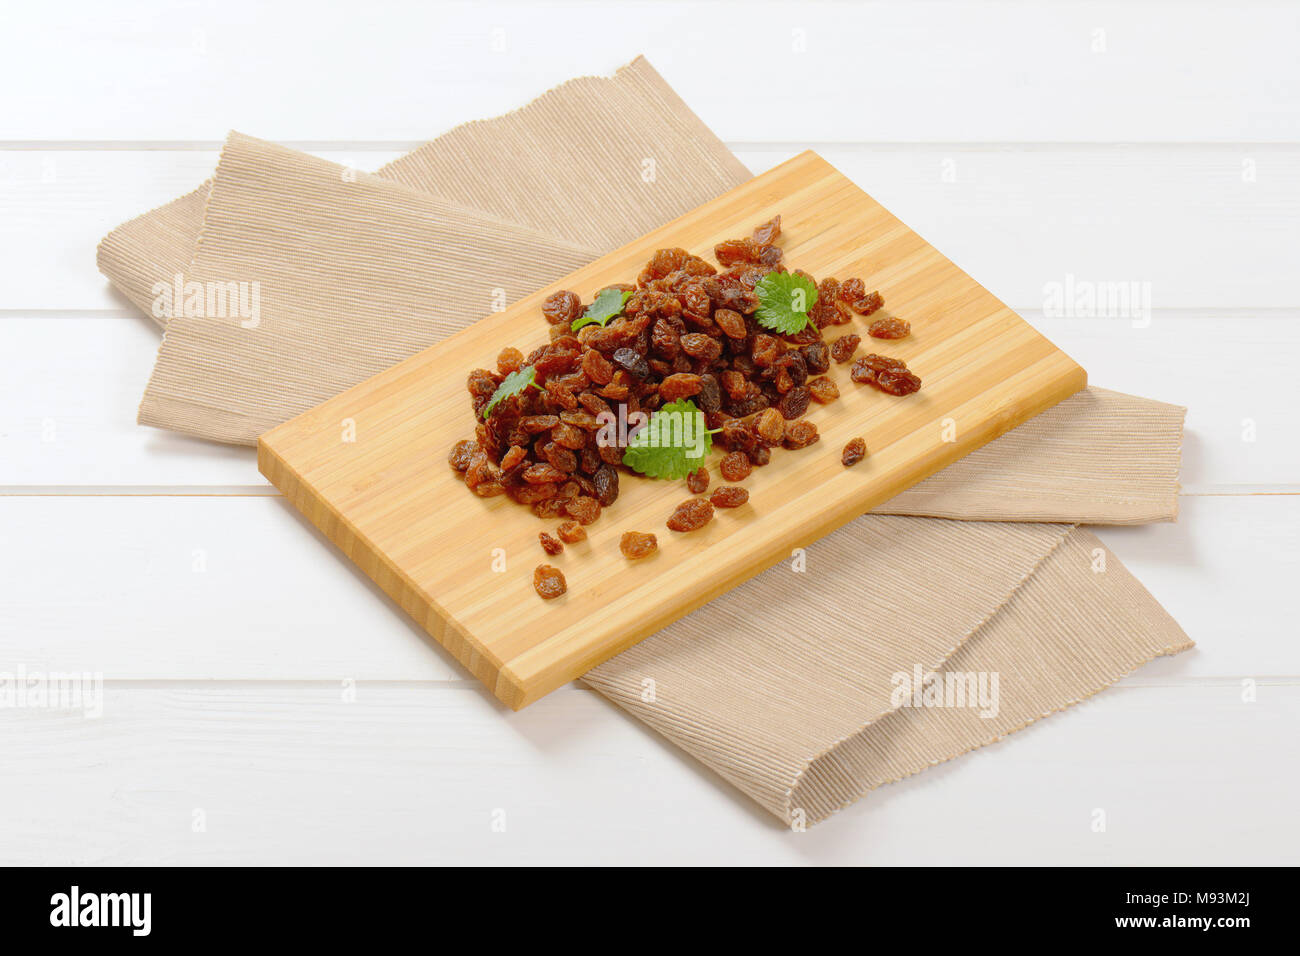 pile of sweet raisins on wooden cutting board Stock Photo